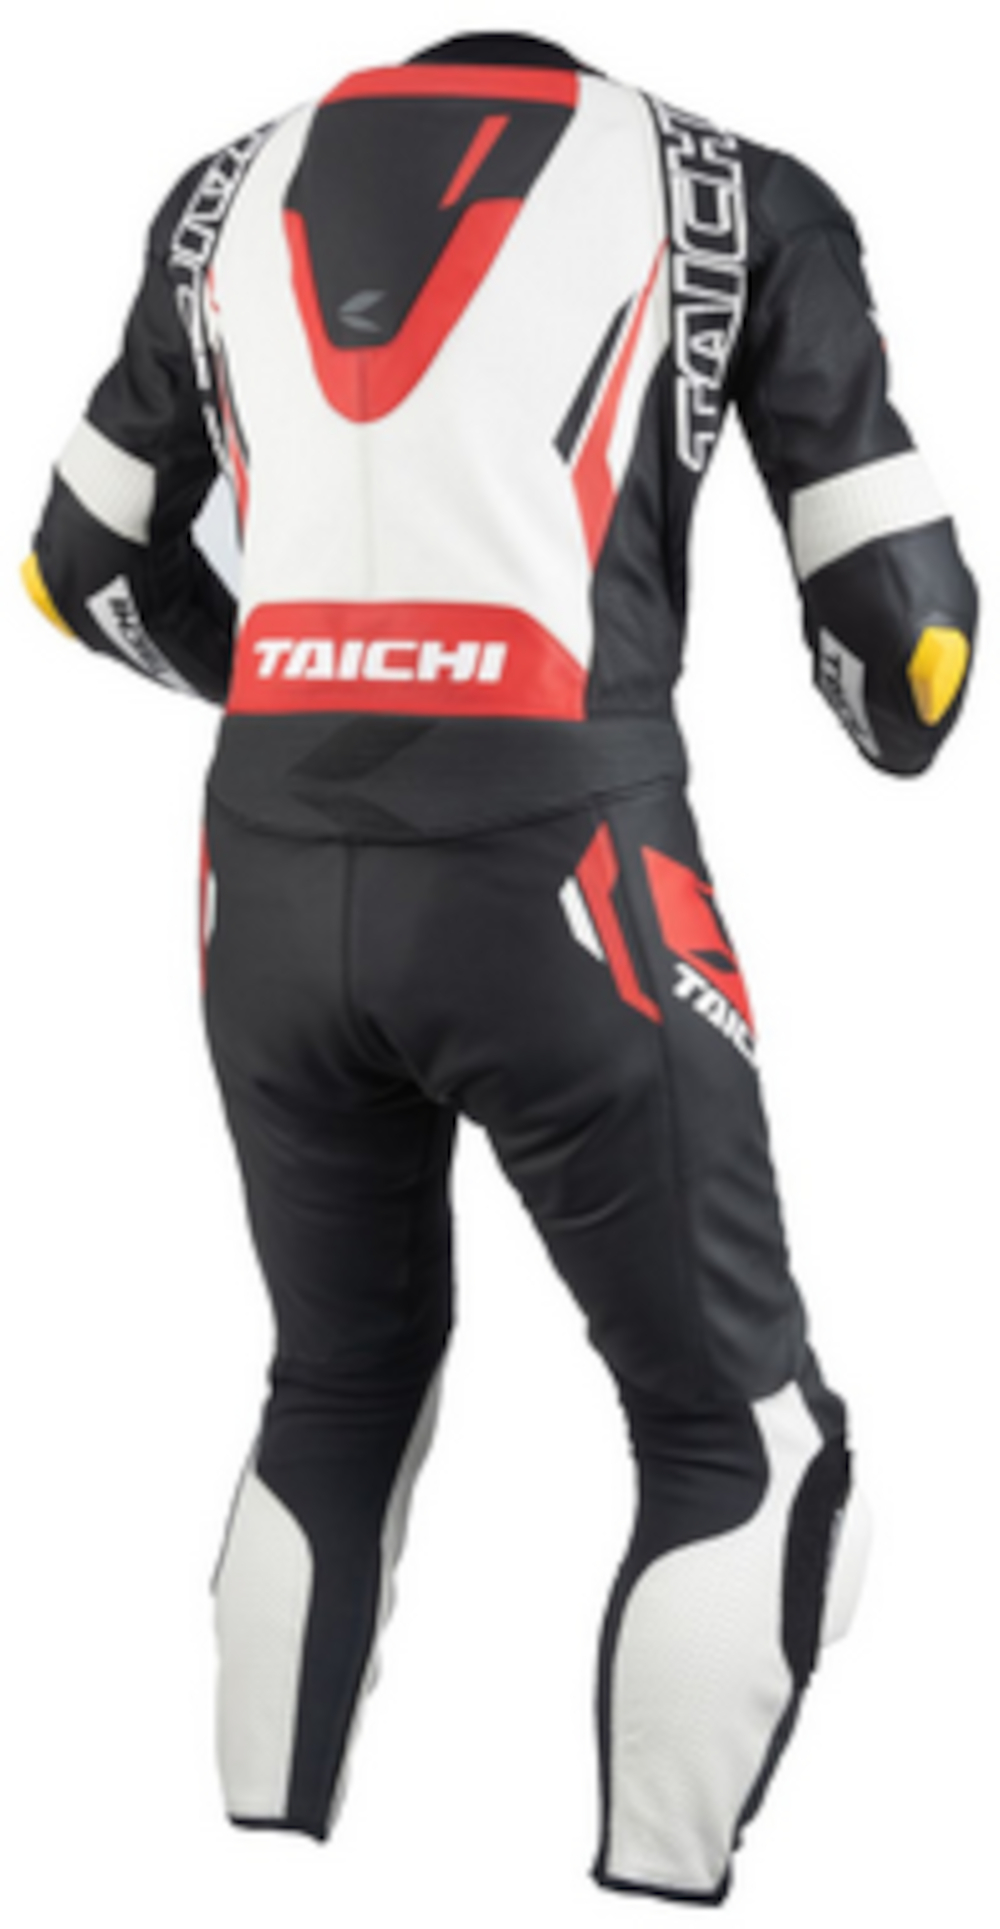 RSTAICHI レーシングスーツ 2022春夏モデル ブラック GP-WRX NXL307